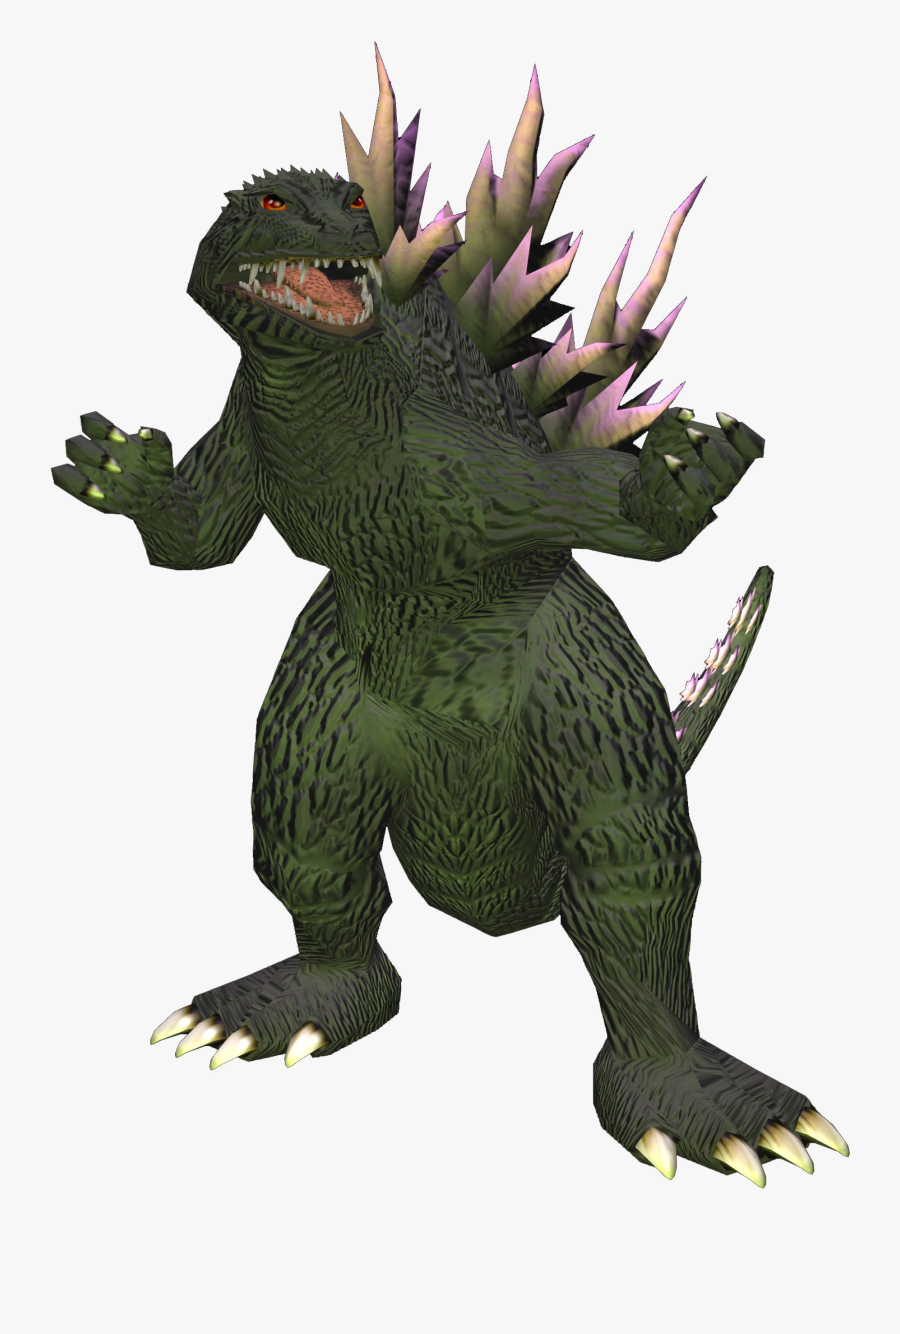 Destroy All Monsters Melee Godzilla - Godzilla 2000 Png, Transparent Clipart